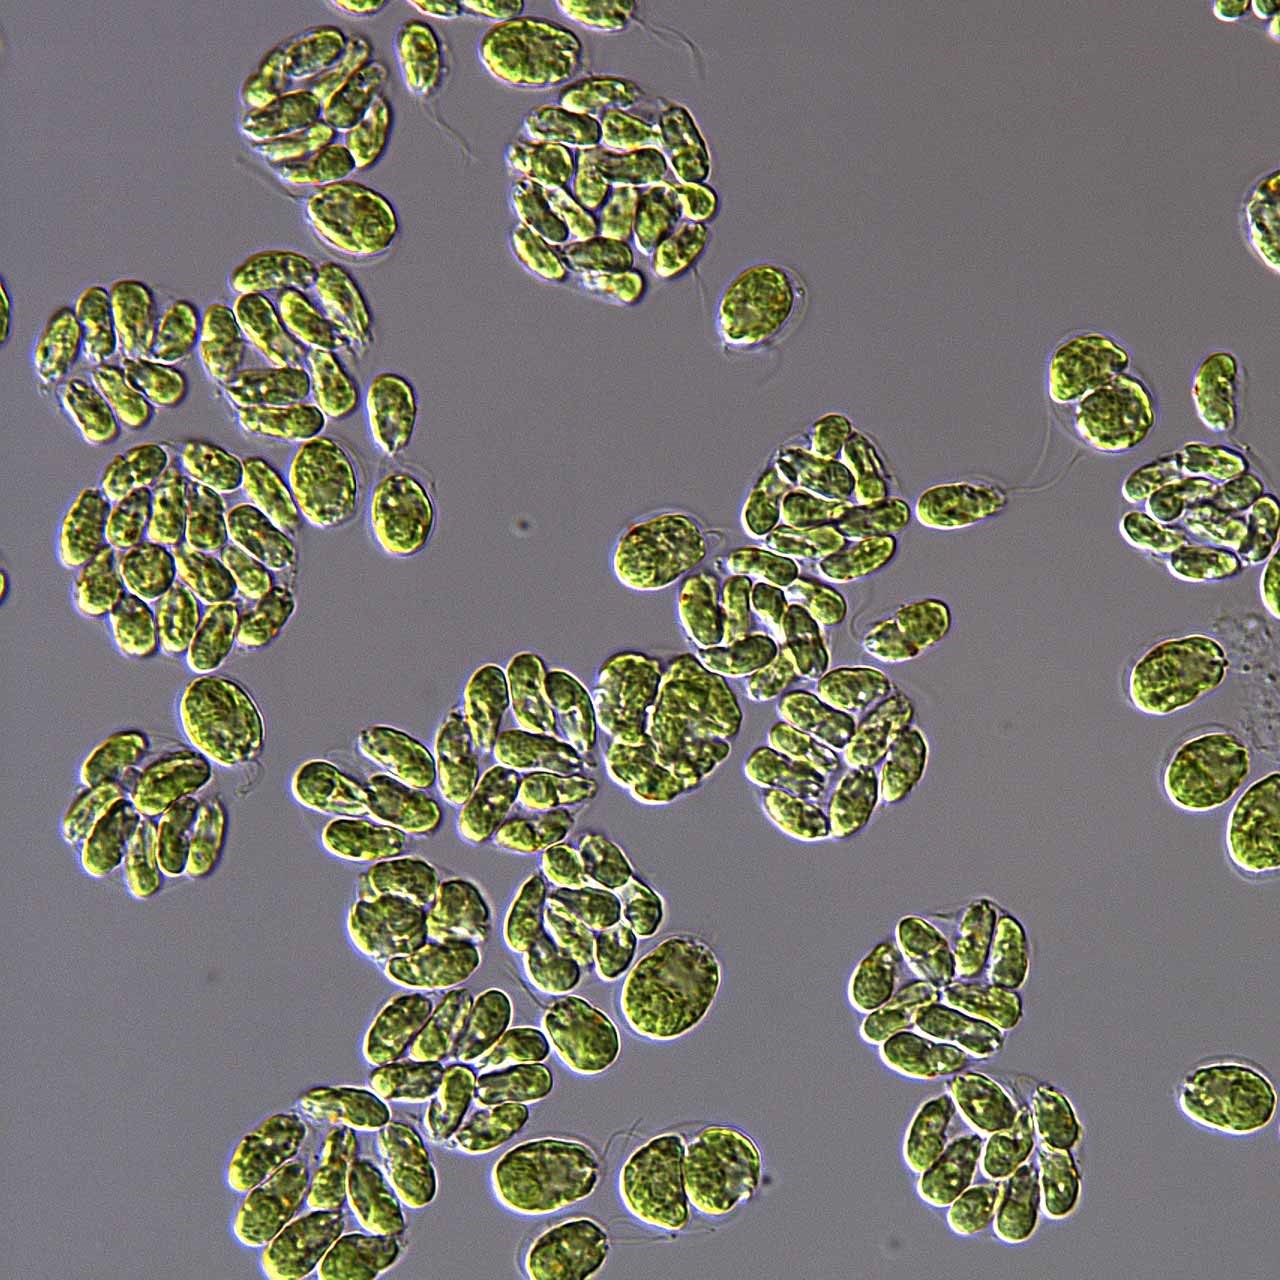 Microscope image of algae